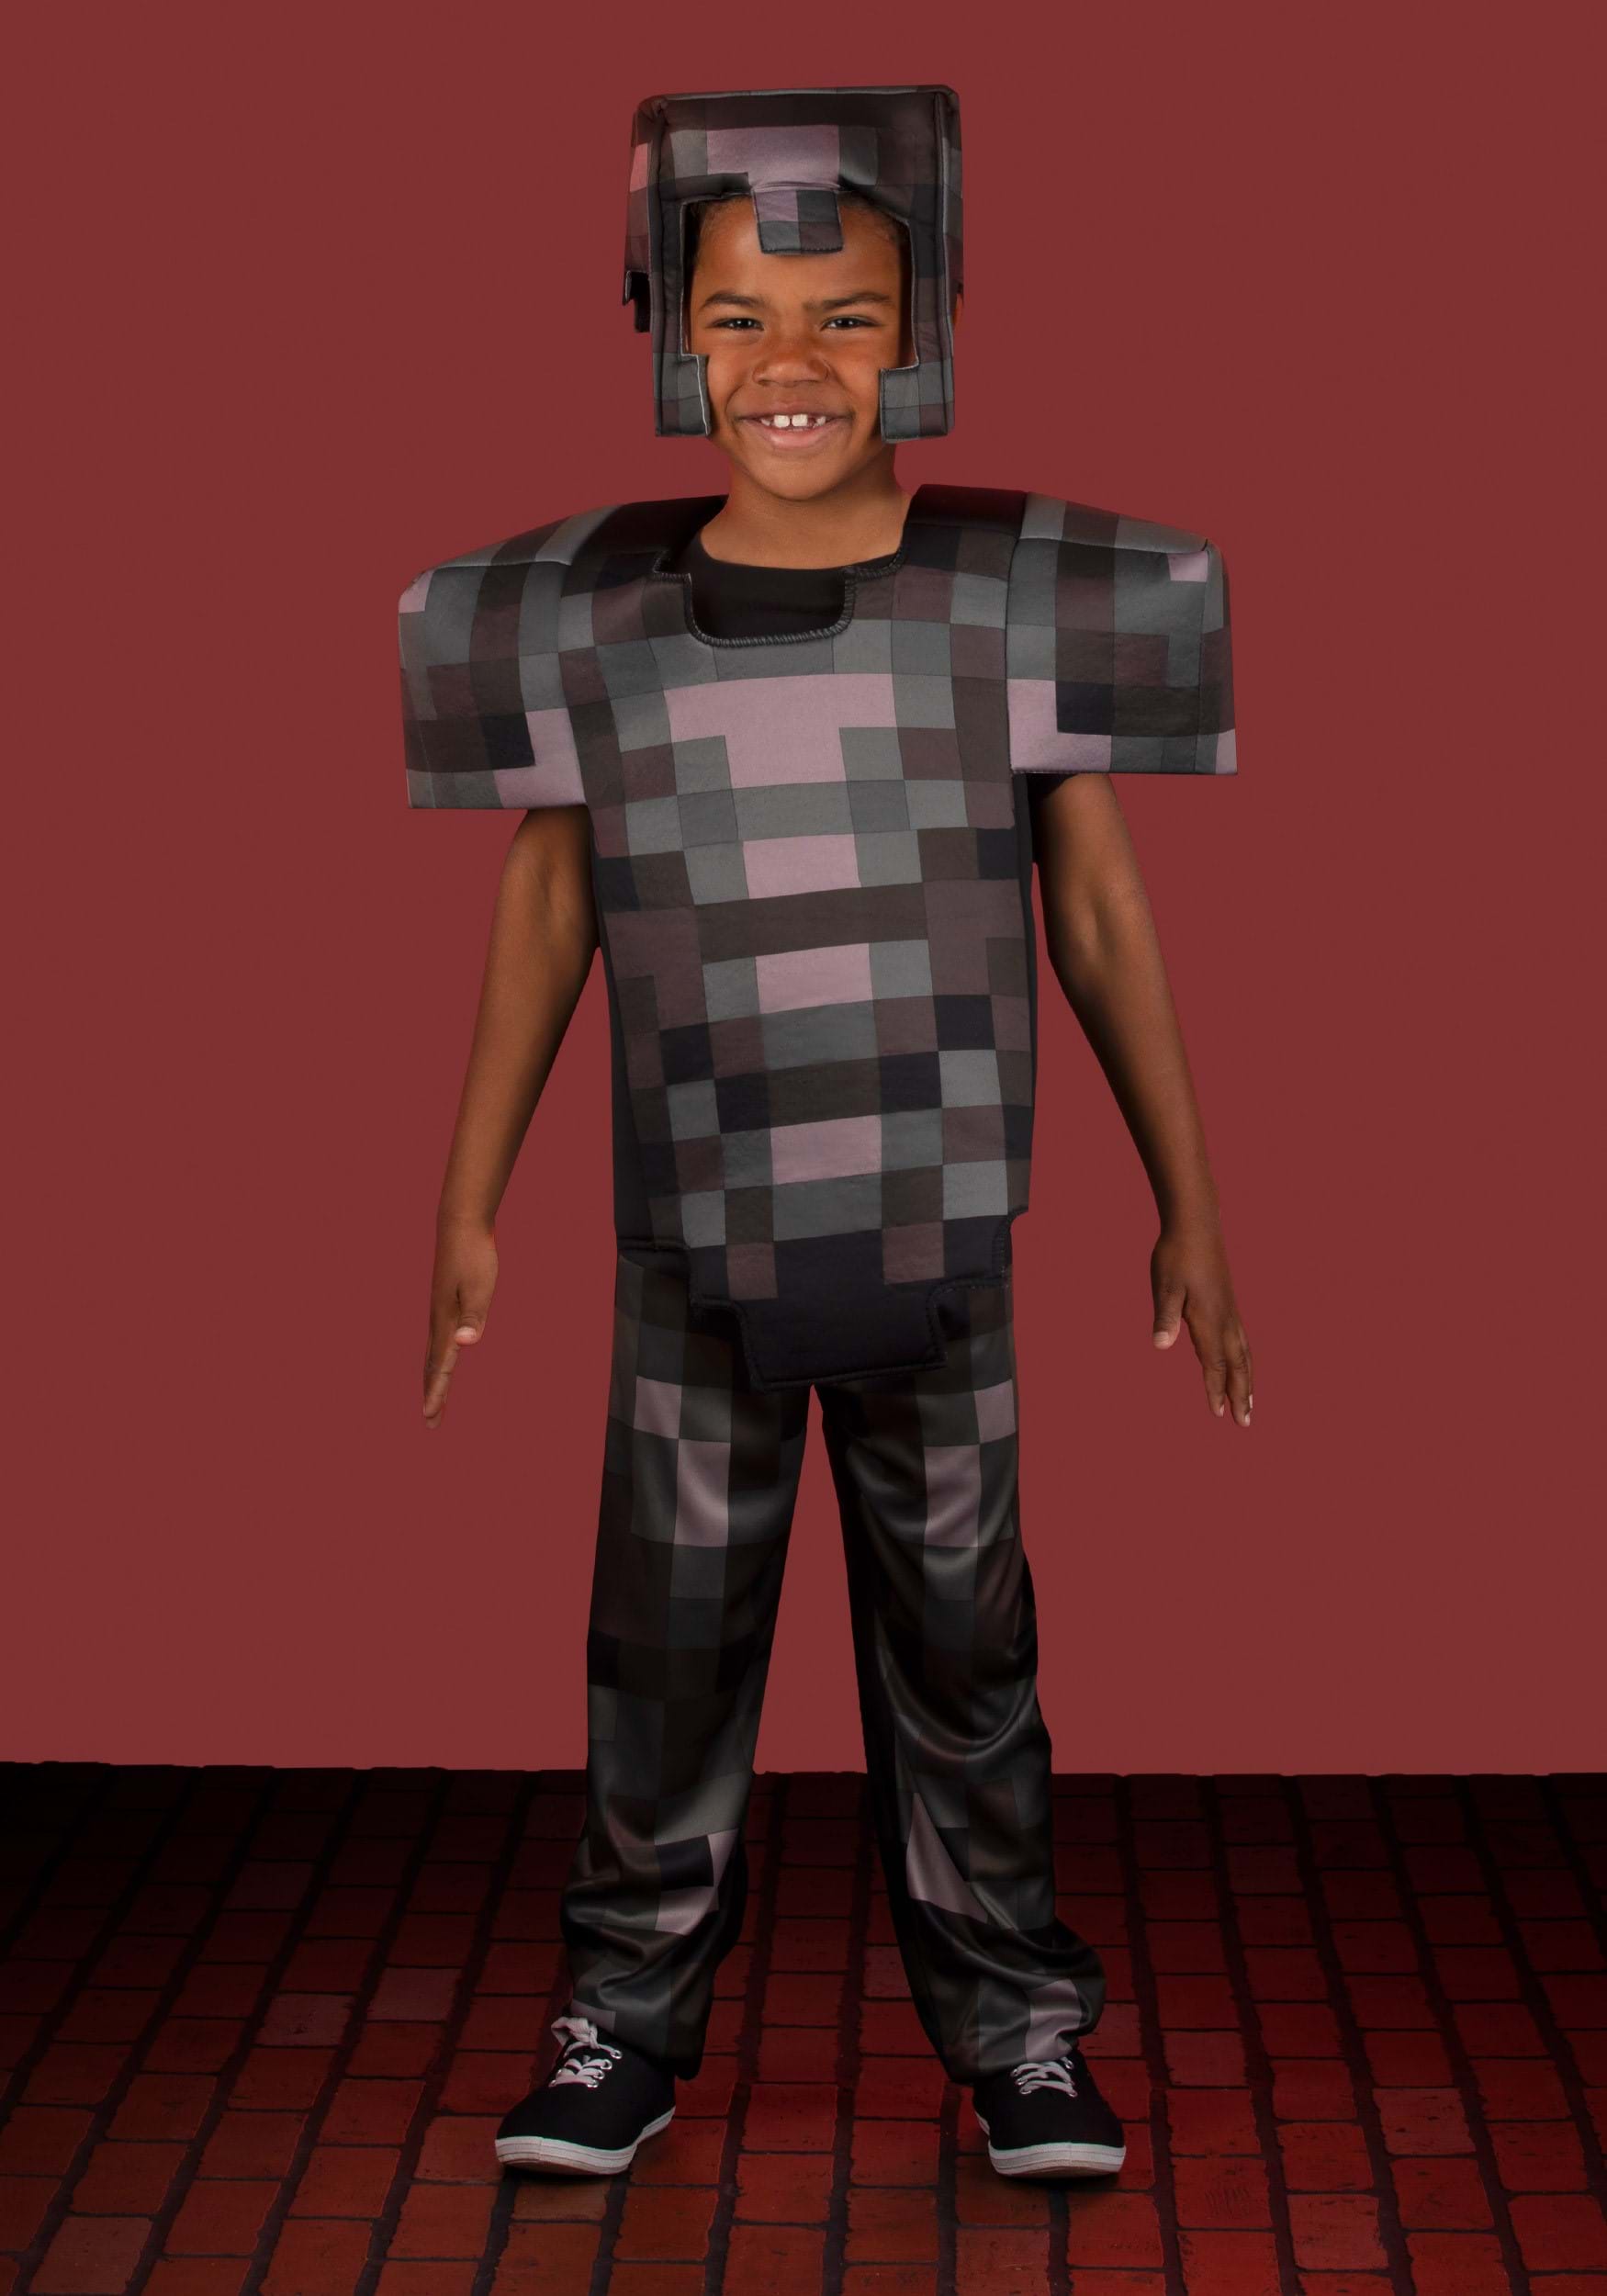 Kid's Minecraft Netherite Armor Deluxe Costume